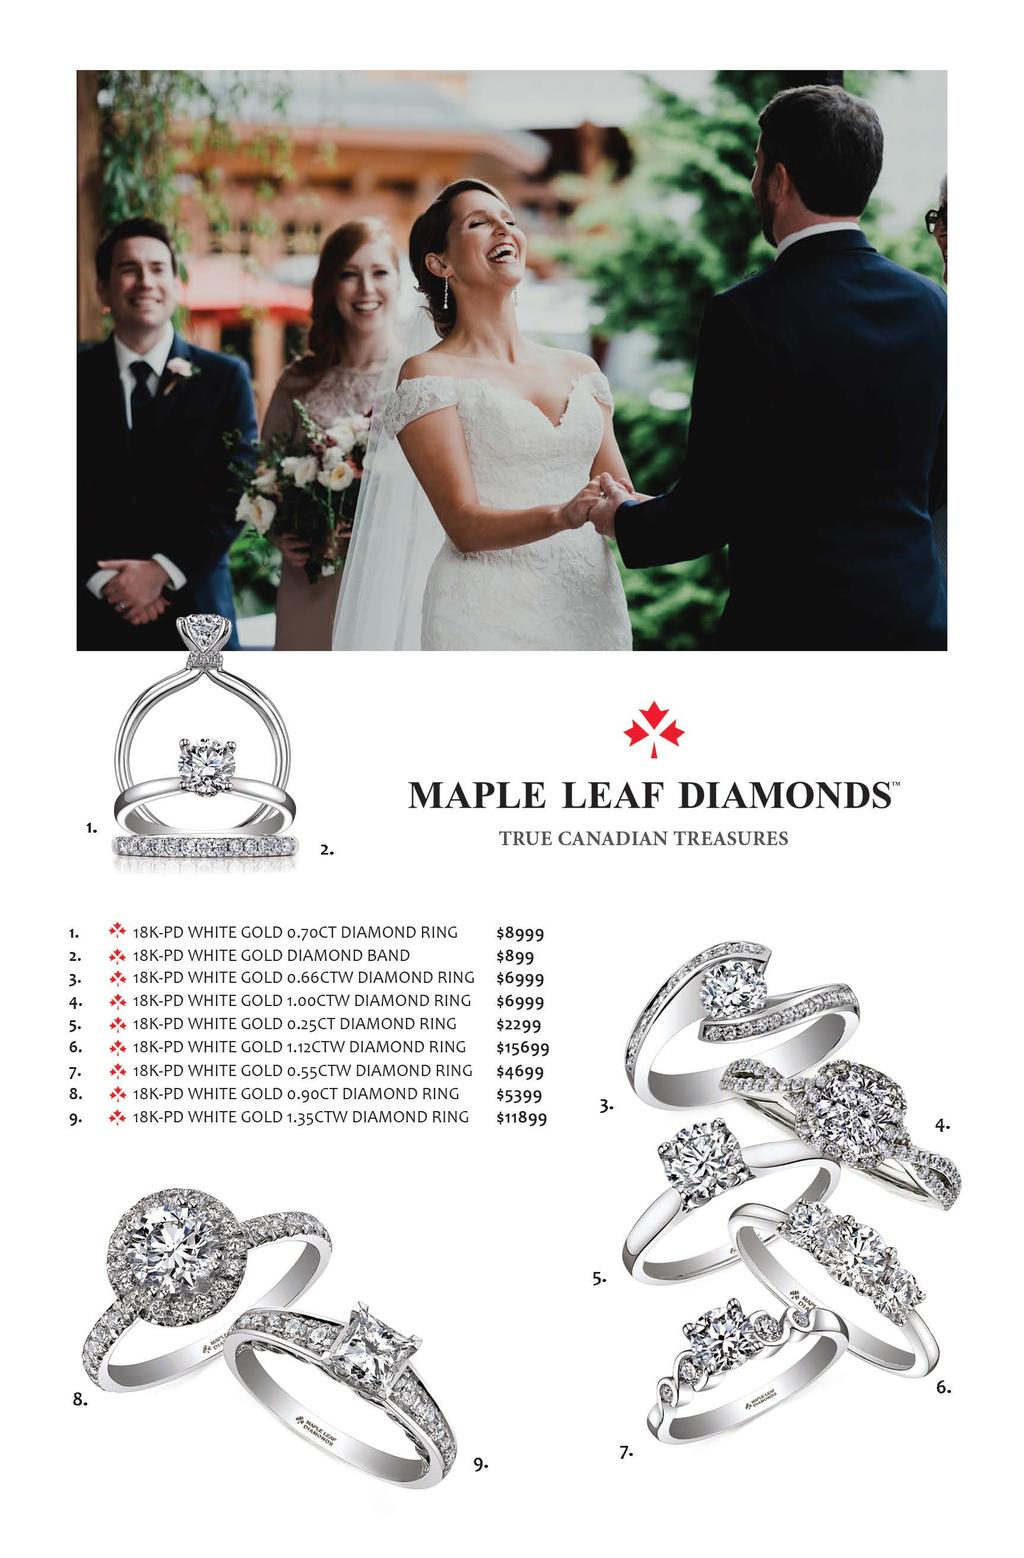 i MAPLE LEAF DIAMONDS'" 2. TRUE CANADIAN TREASURES 1. 18K-PD W HITE GOLD o.70ct DIAMOND RING $8999 2. 18K-PD W HITE GOLD DIAMOND BAND $899 3. 18K-PD W HITE GOLD o.66ctw DIAMOND RING $6999 4.